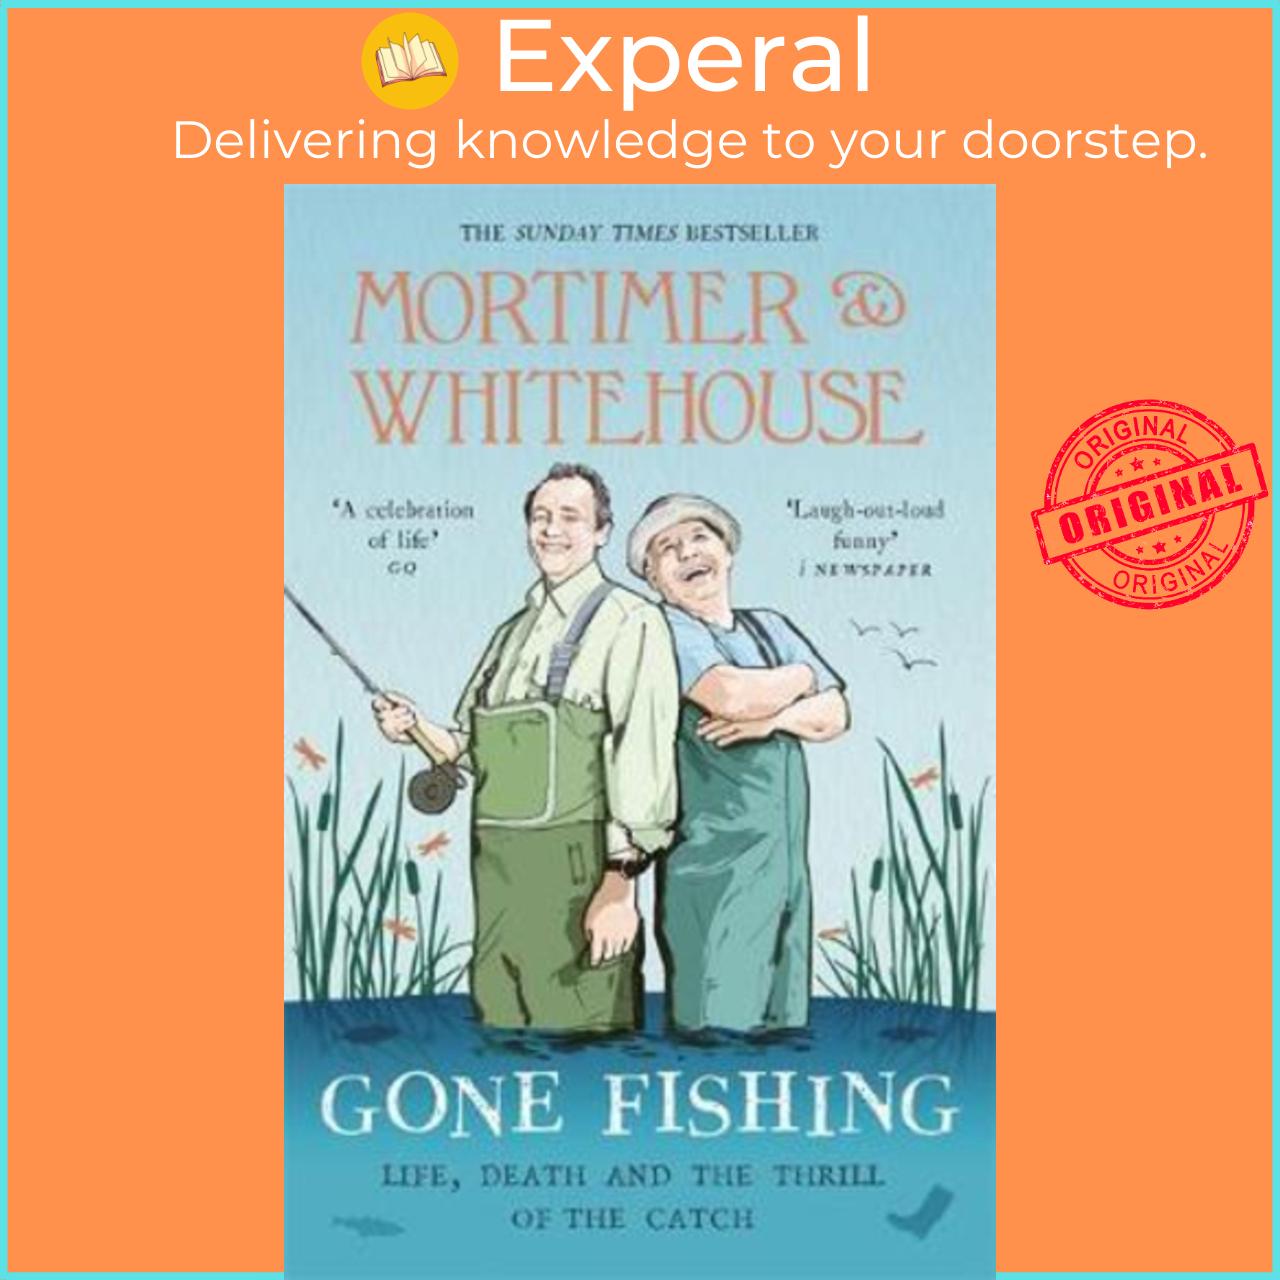 Sách - Mortimer & Whitehouse: Gone Fishing by Bob Mortimer (UK edition, paperback)